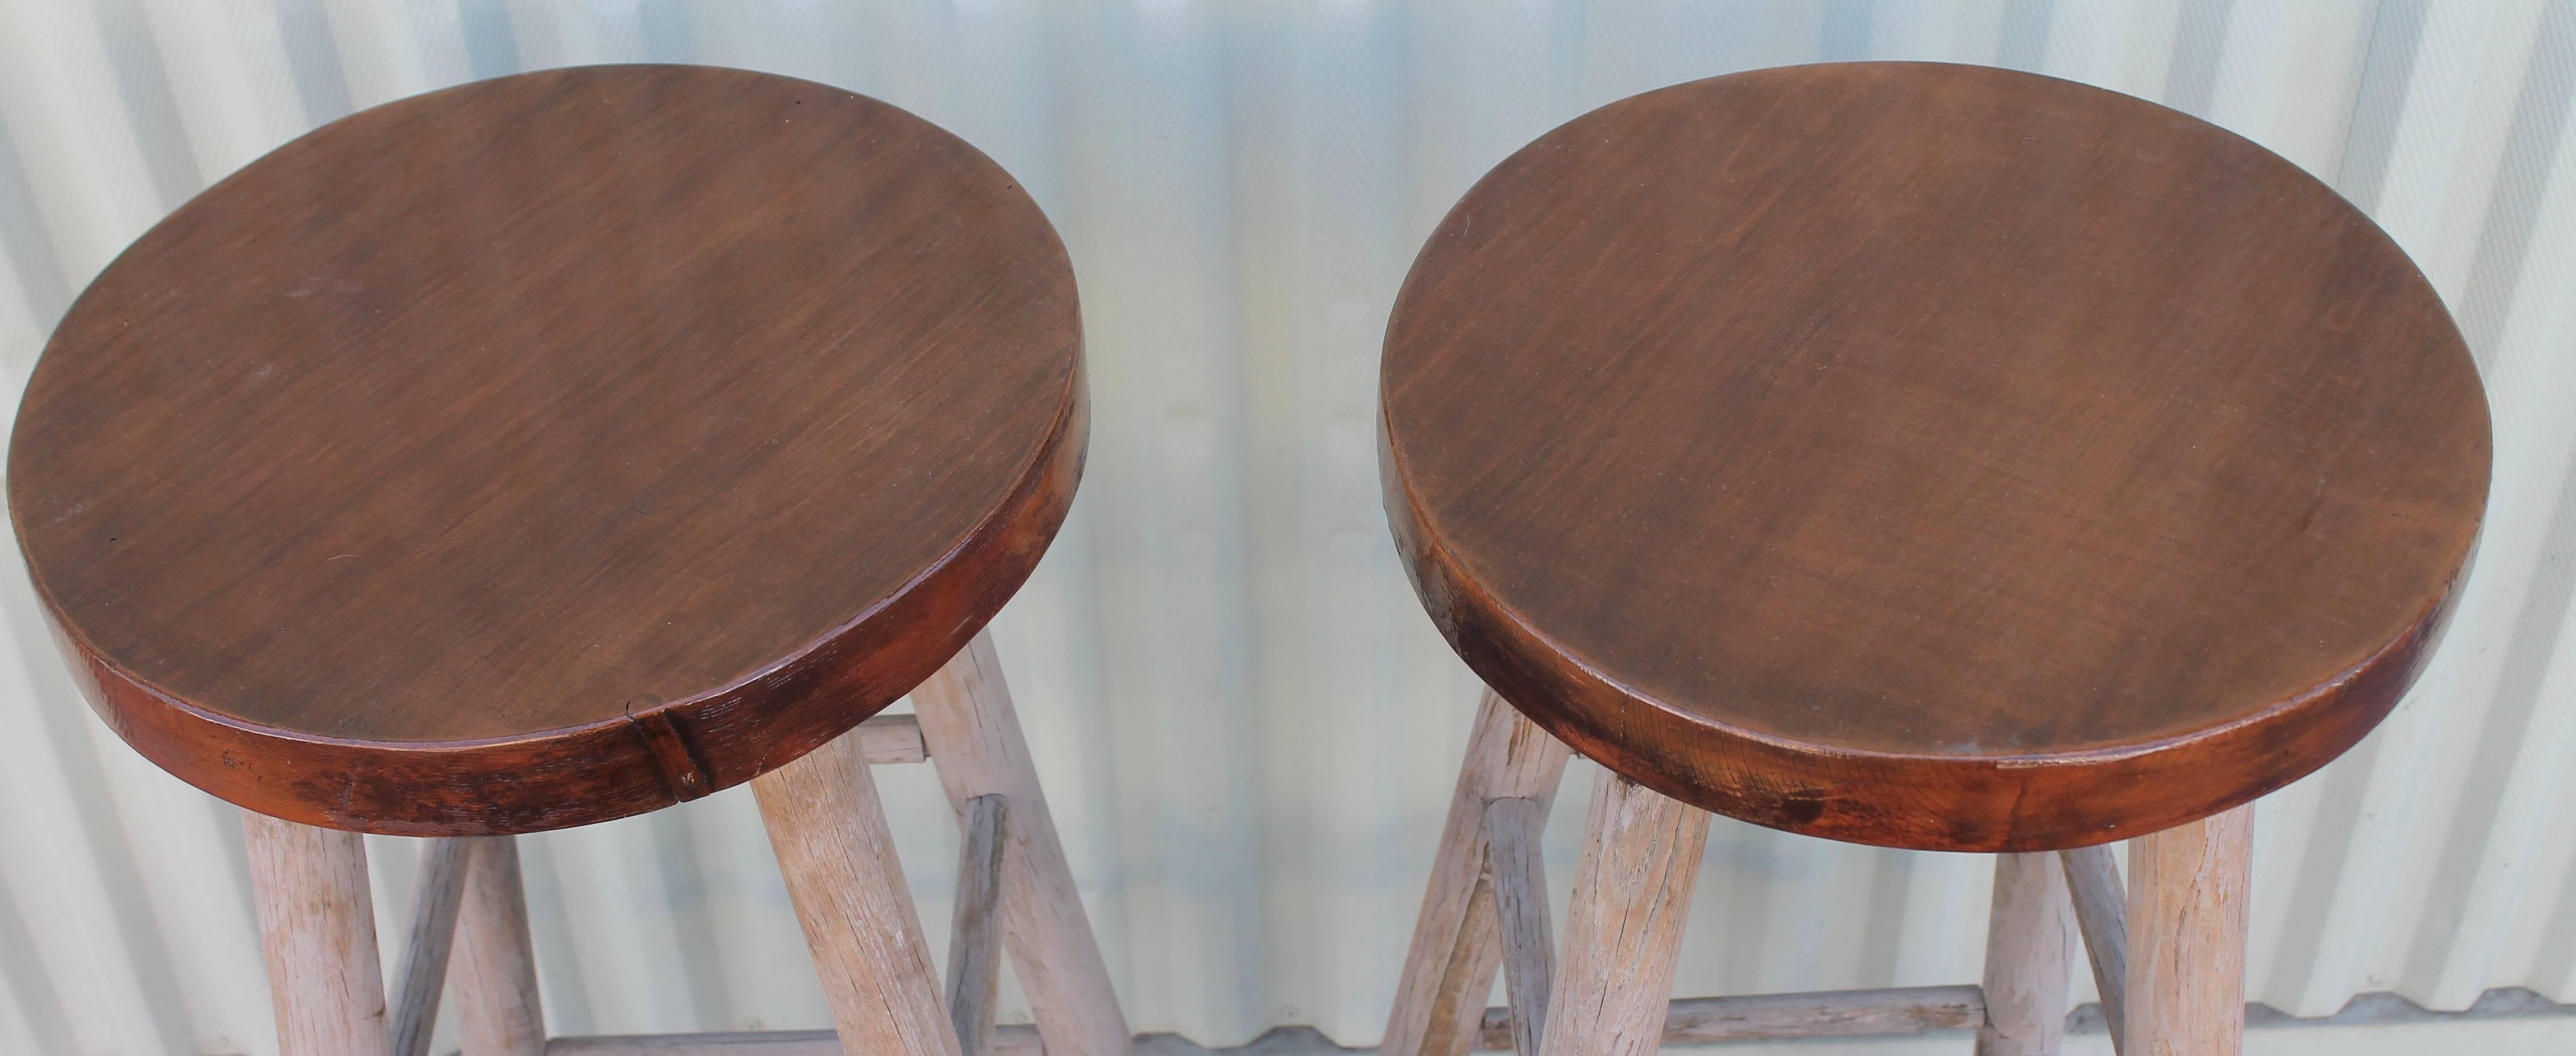 rustic painted bar stools